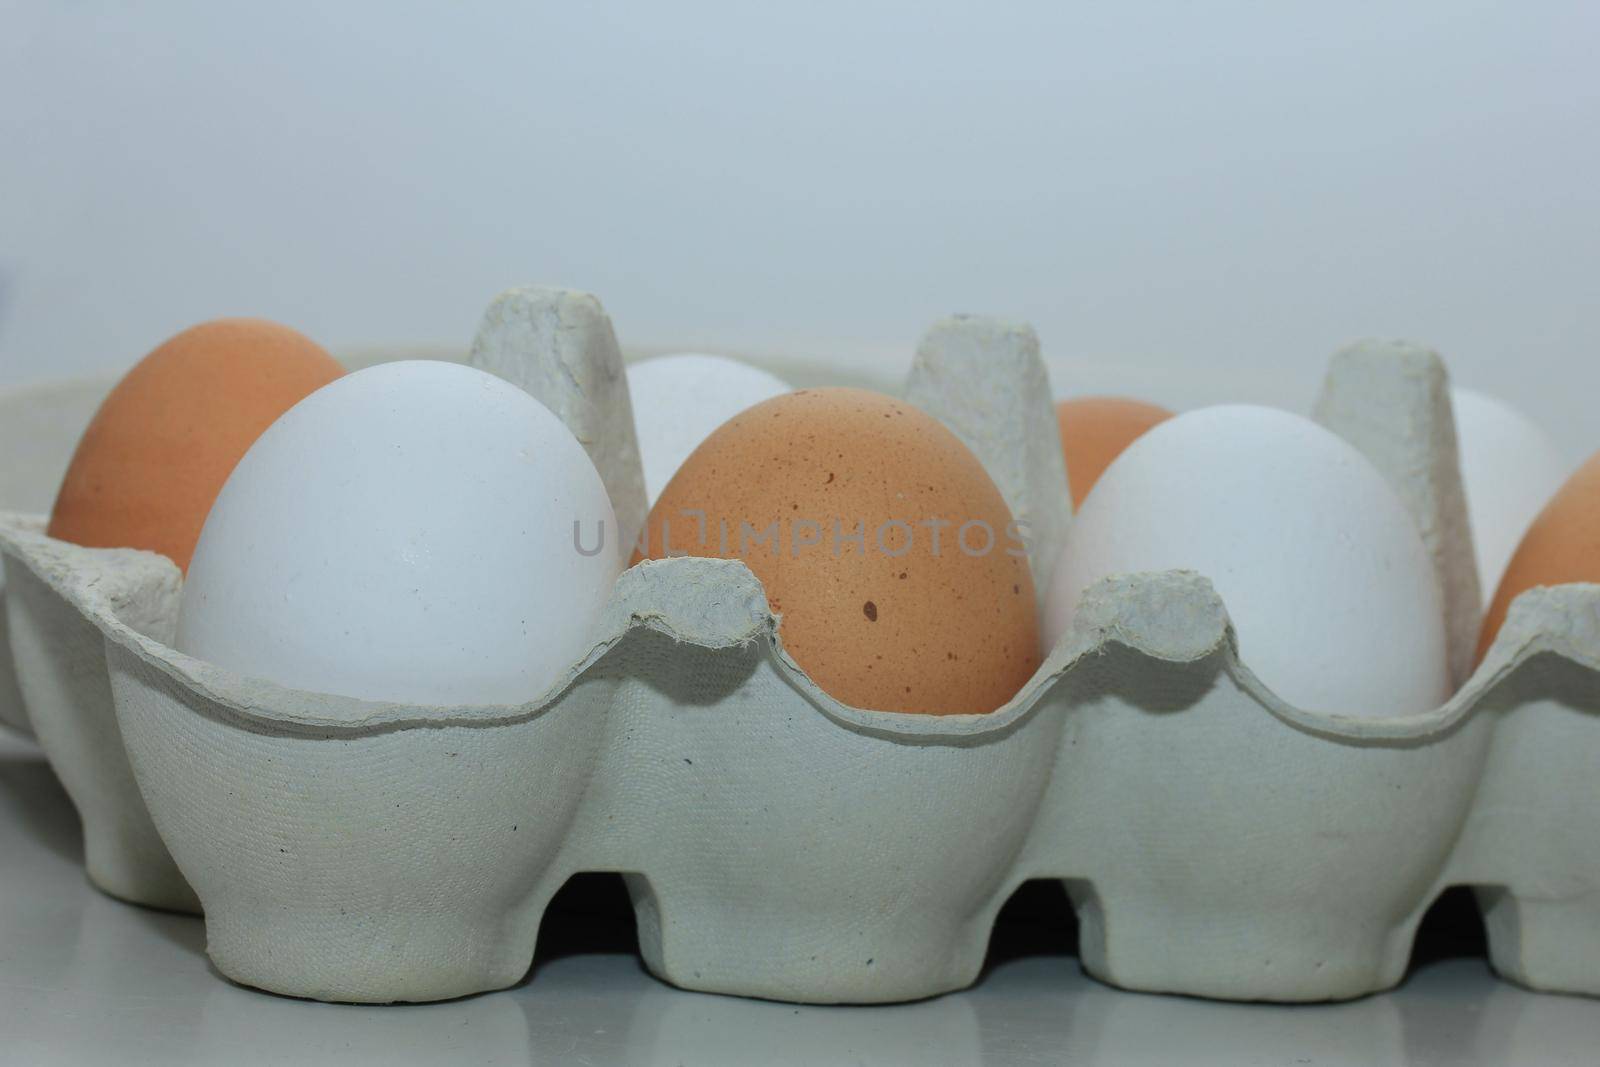 Ten fresh eggs in a carton box by studioportosabbia